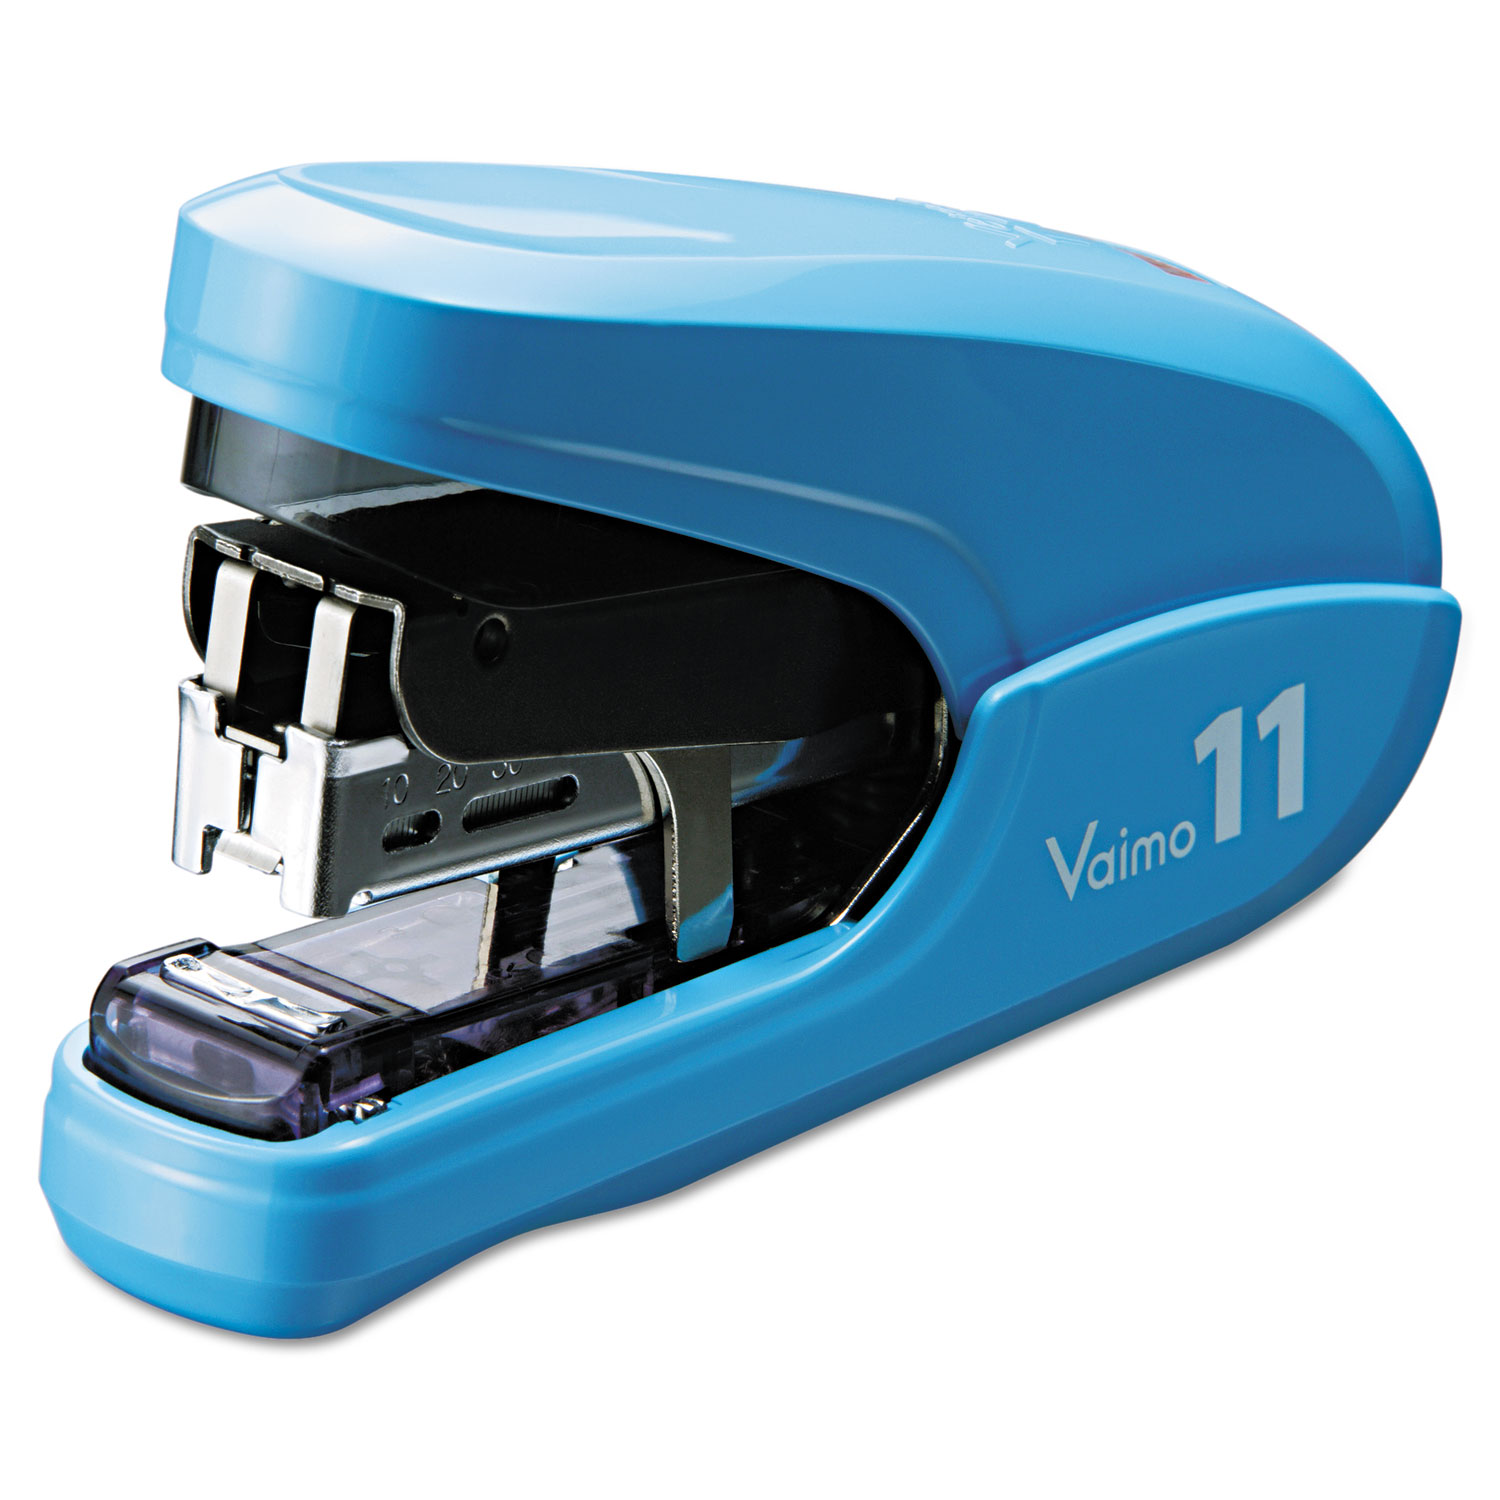  MAX HD92320 Vaimo Stapler, 35-Sheet Capacity, Blue (MXBHD11FLKBE) 